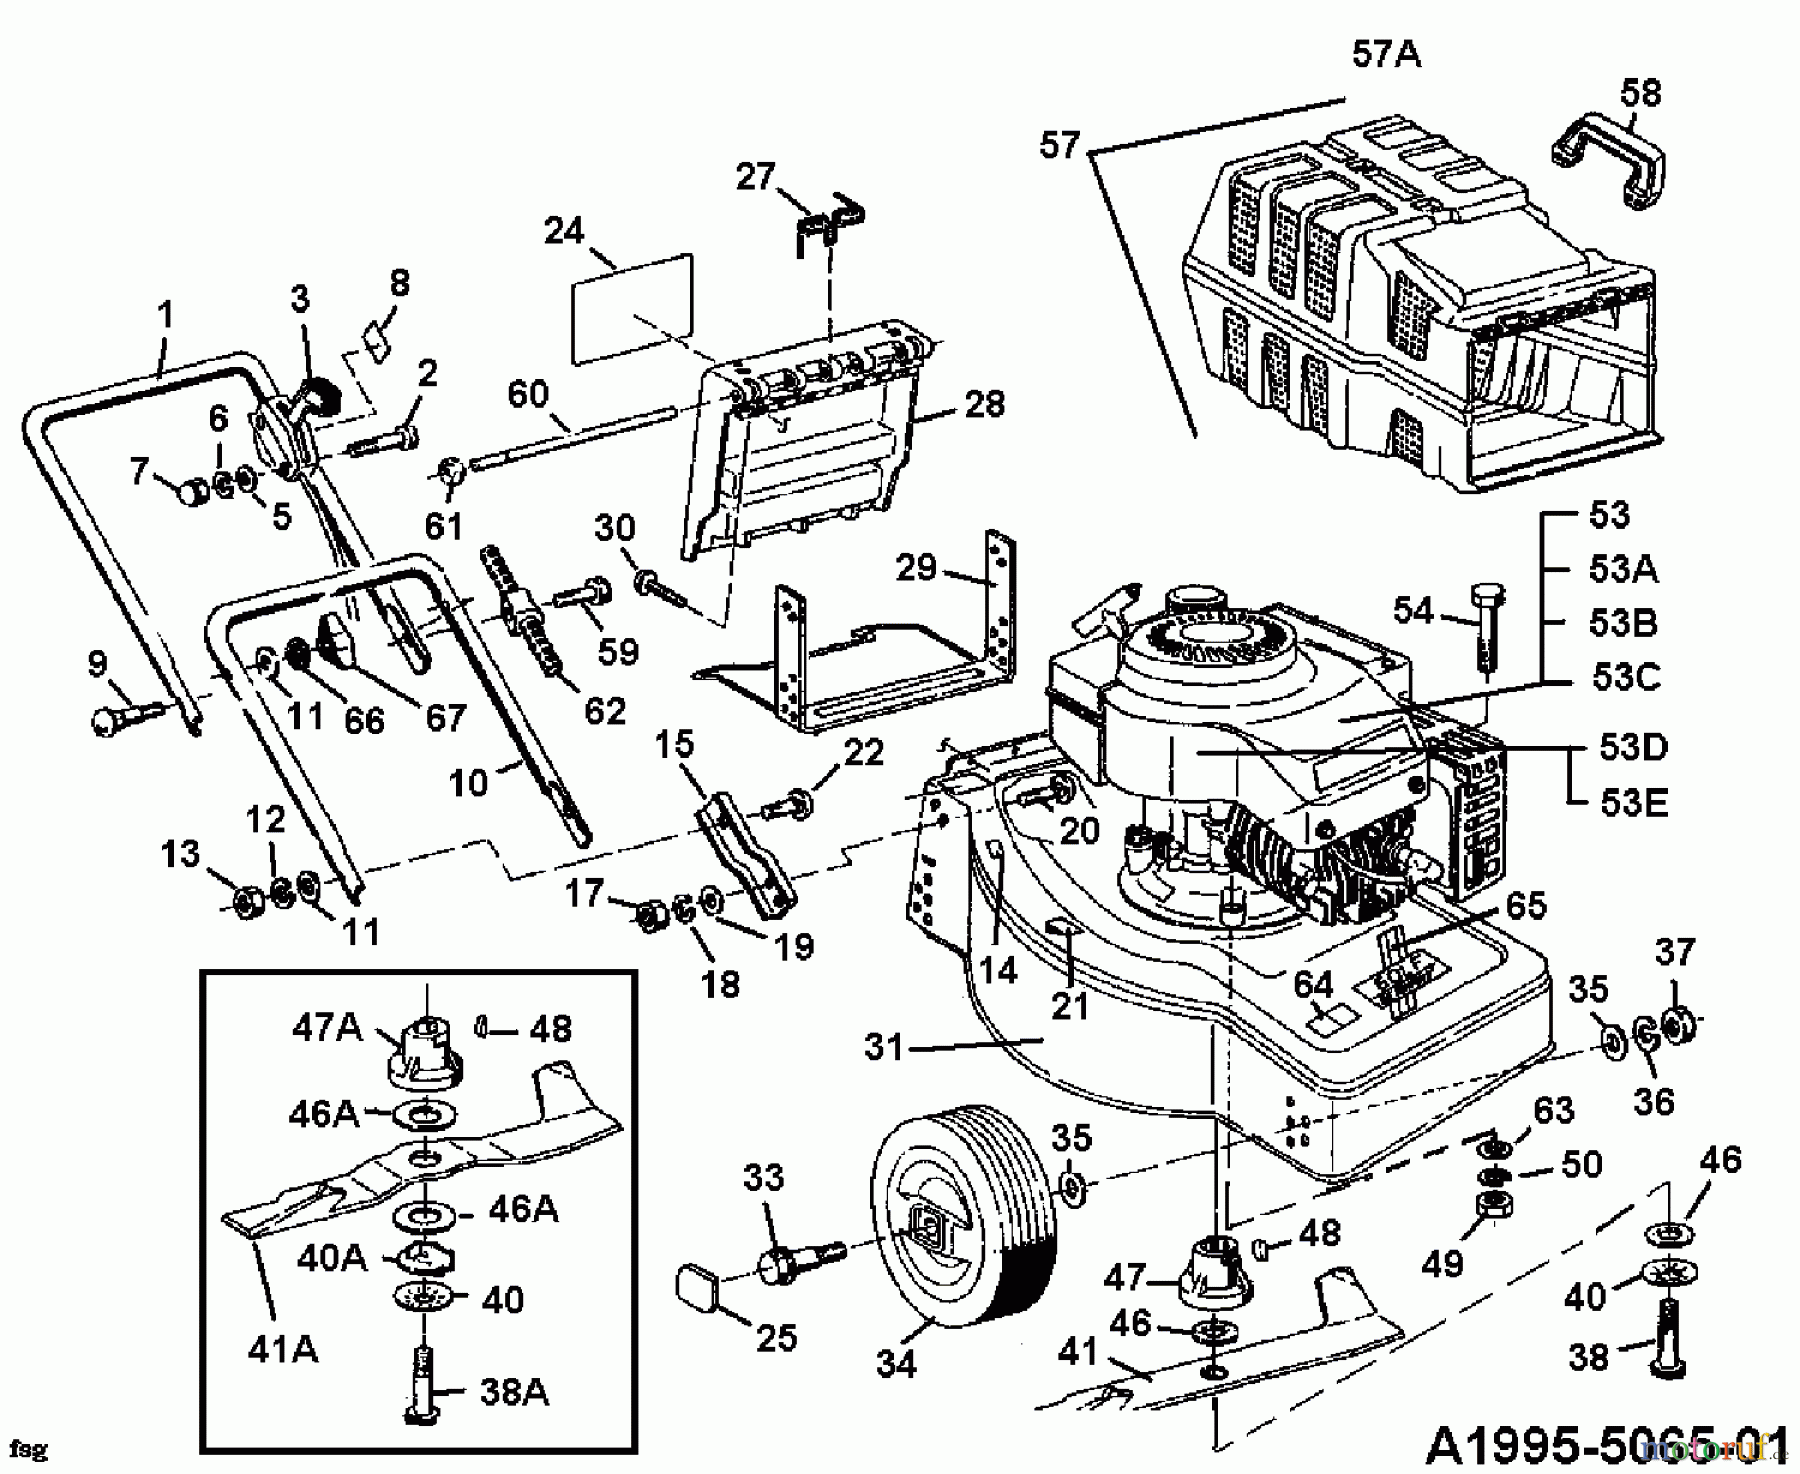  Golf Petrol mower B 02813.04  (1995) Basic machine